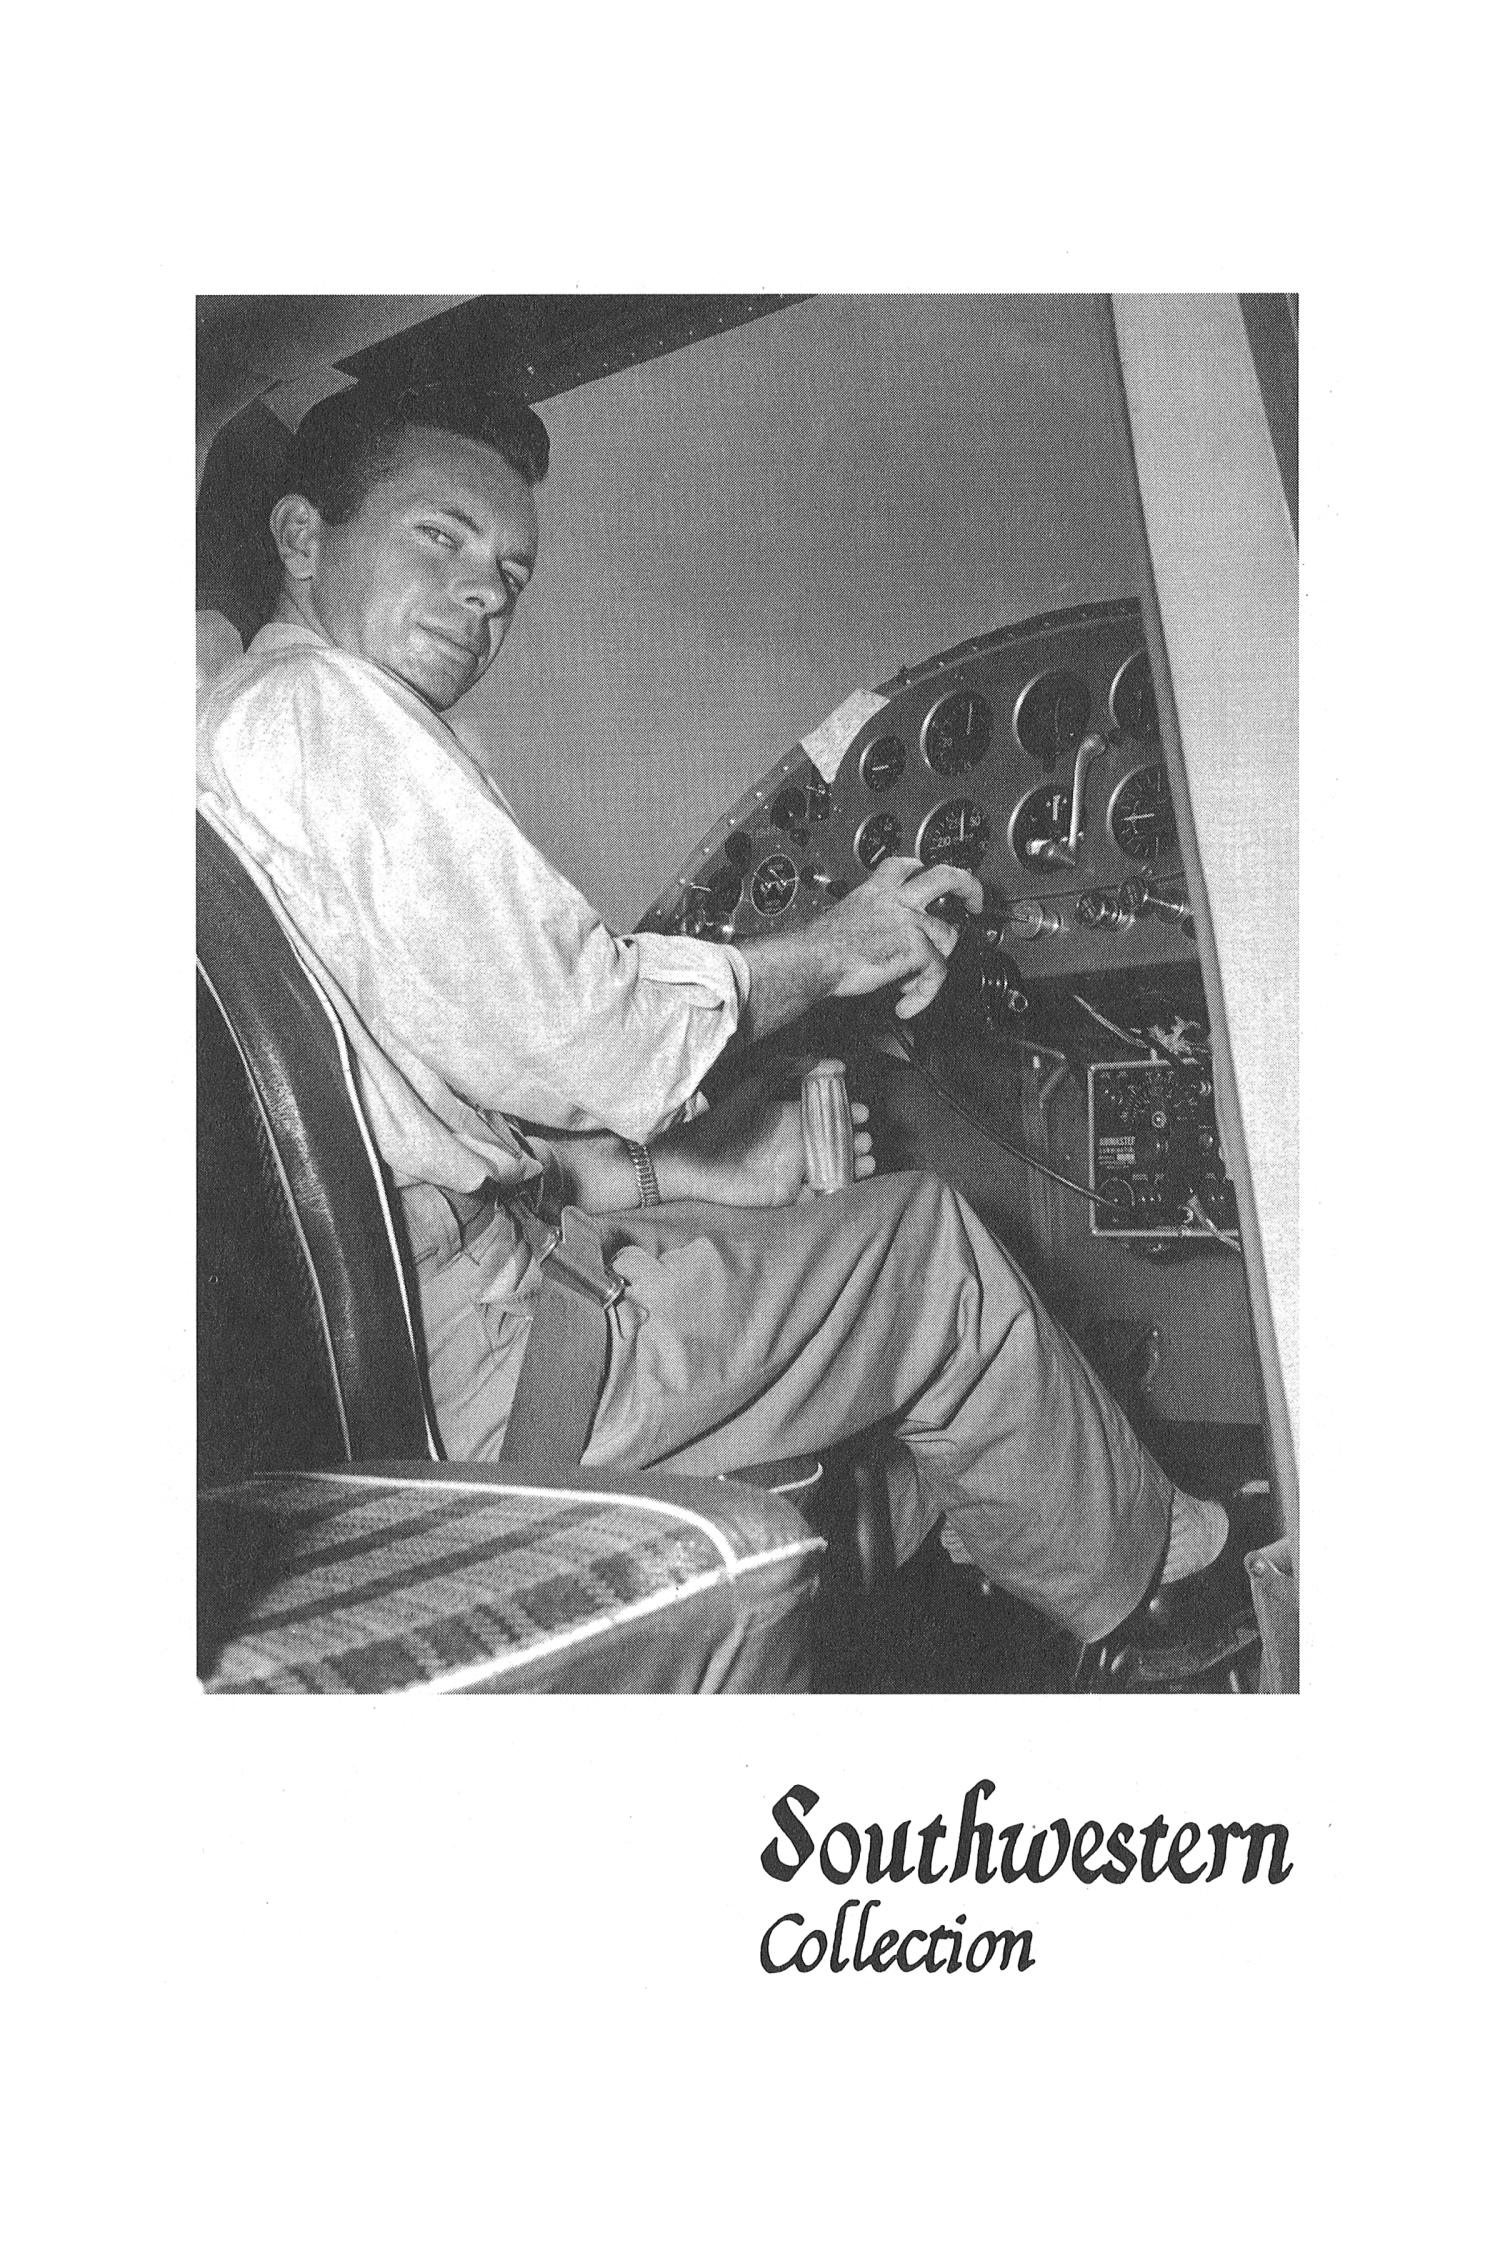 The Southwestern Historical Quarterly, Volume 107, July 2003 - April, 2004
                                                
                                                    603
                                                